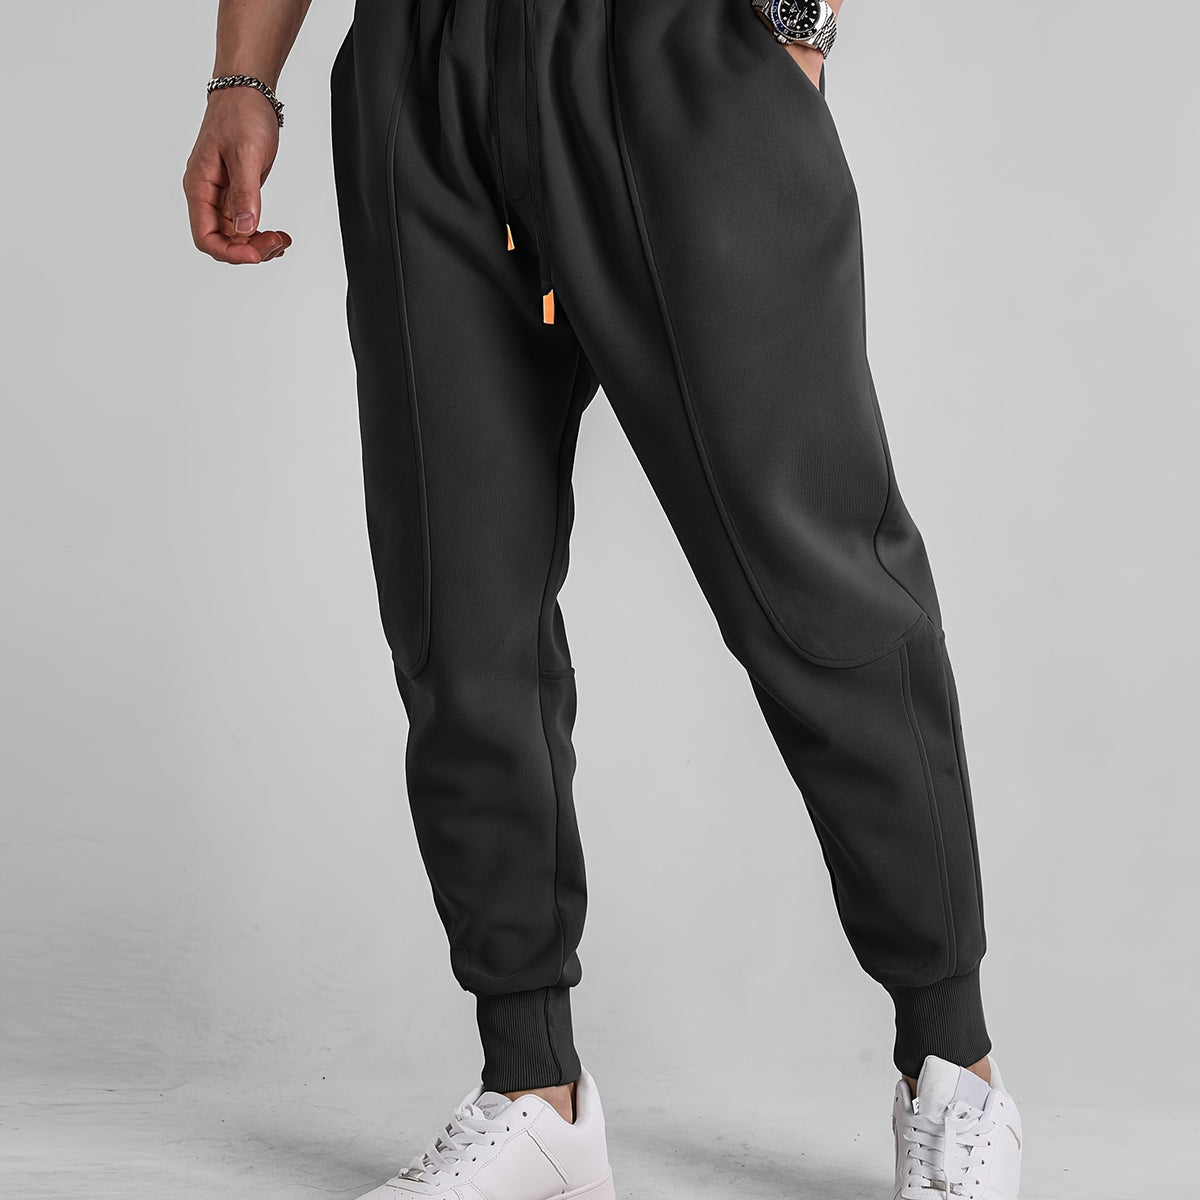 Men's Drawstring Solid Color Sweatpants, Pocket Warm Casual Comfy Jogger Pants, Mens Clothing For Autumn Winter